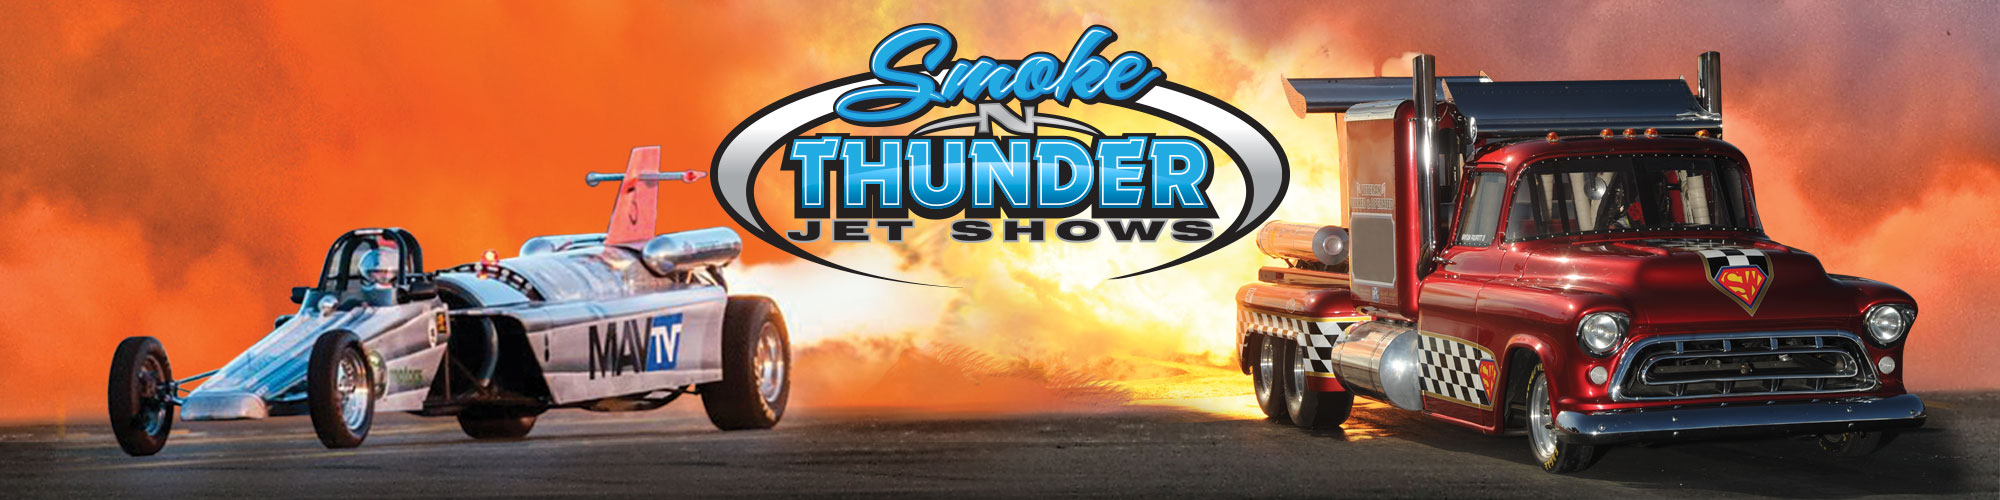 Smoke-n-Thunder Jet Show